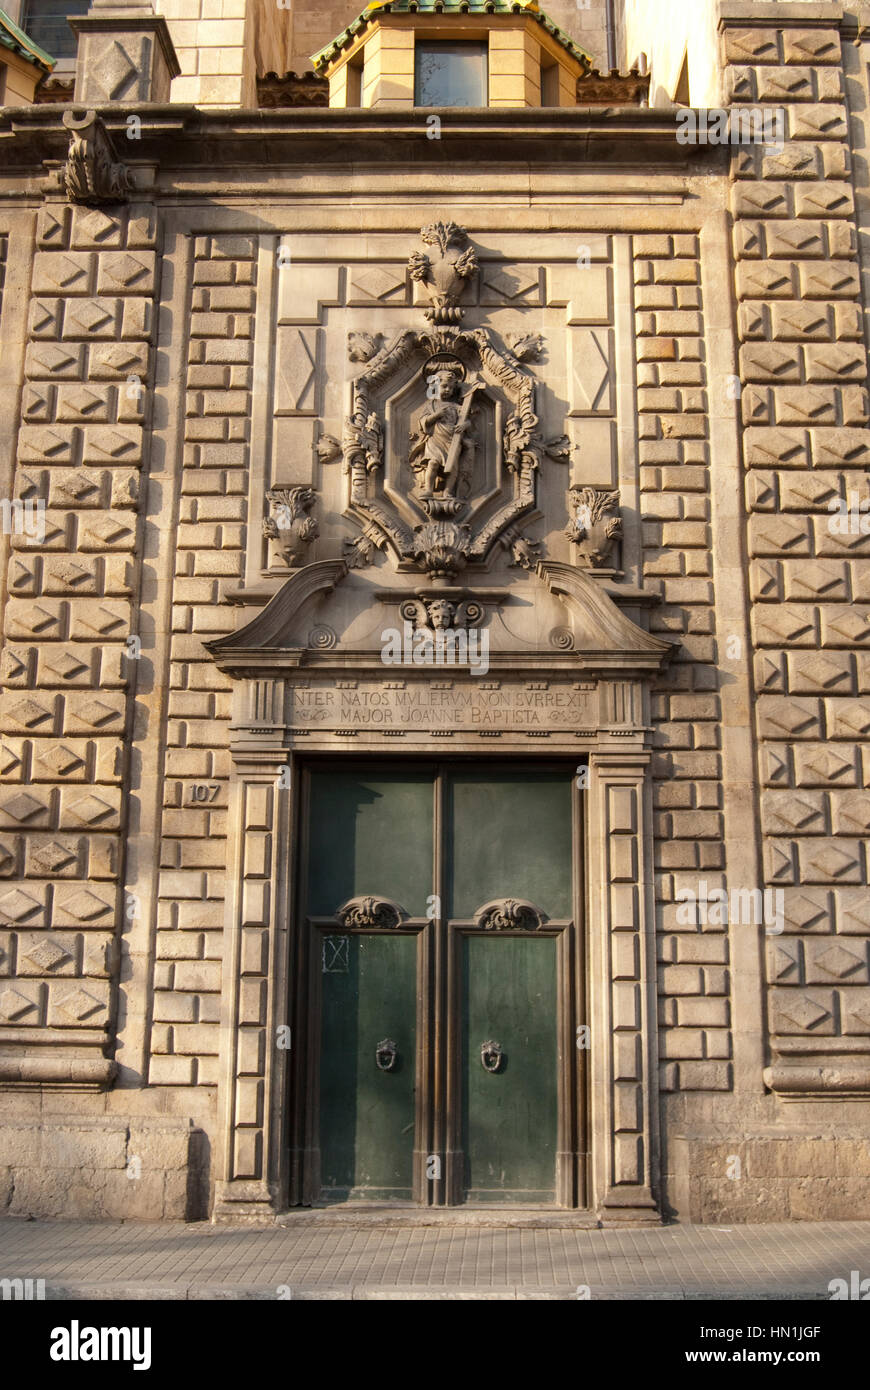 Ornato porta della chiesa Parròquia de la Mare de Déu de Betlem, parrocchia di Nostra Signora di Betlemme situato in La Rambala a Barcellona Foto Stock